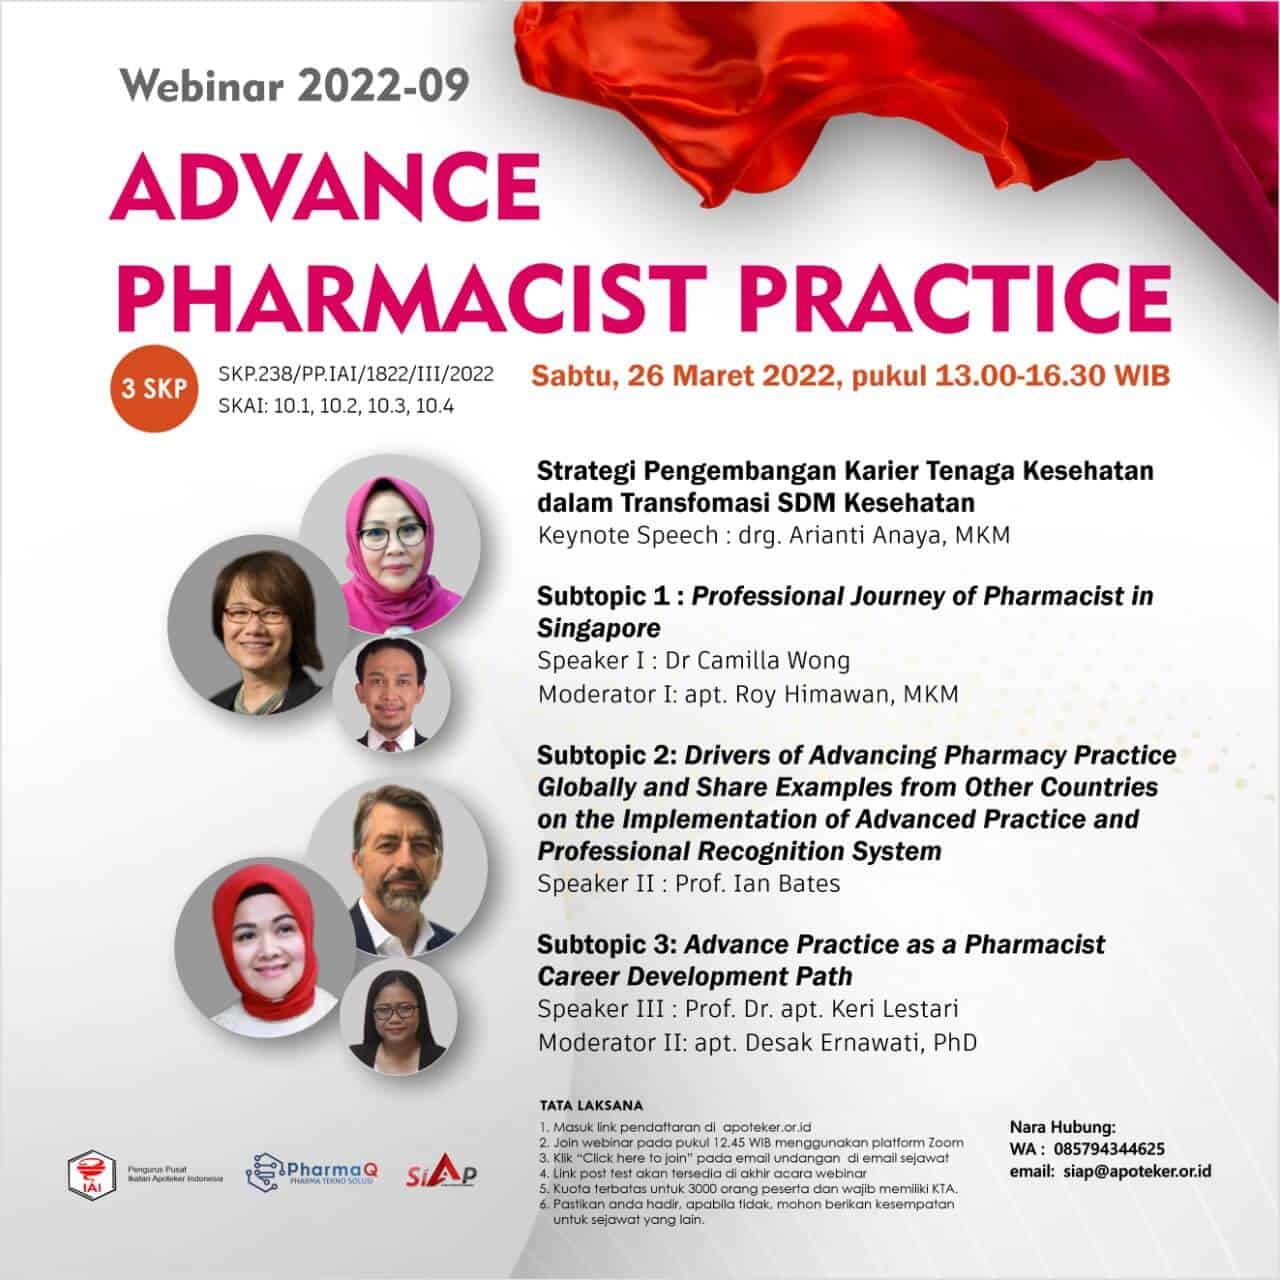 Kunci Jawaban Webinar Advance Pharmacist Practice [Webinar 2022-09]